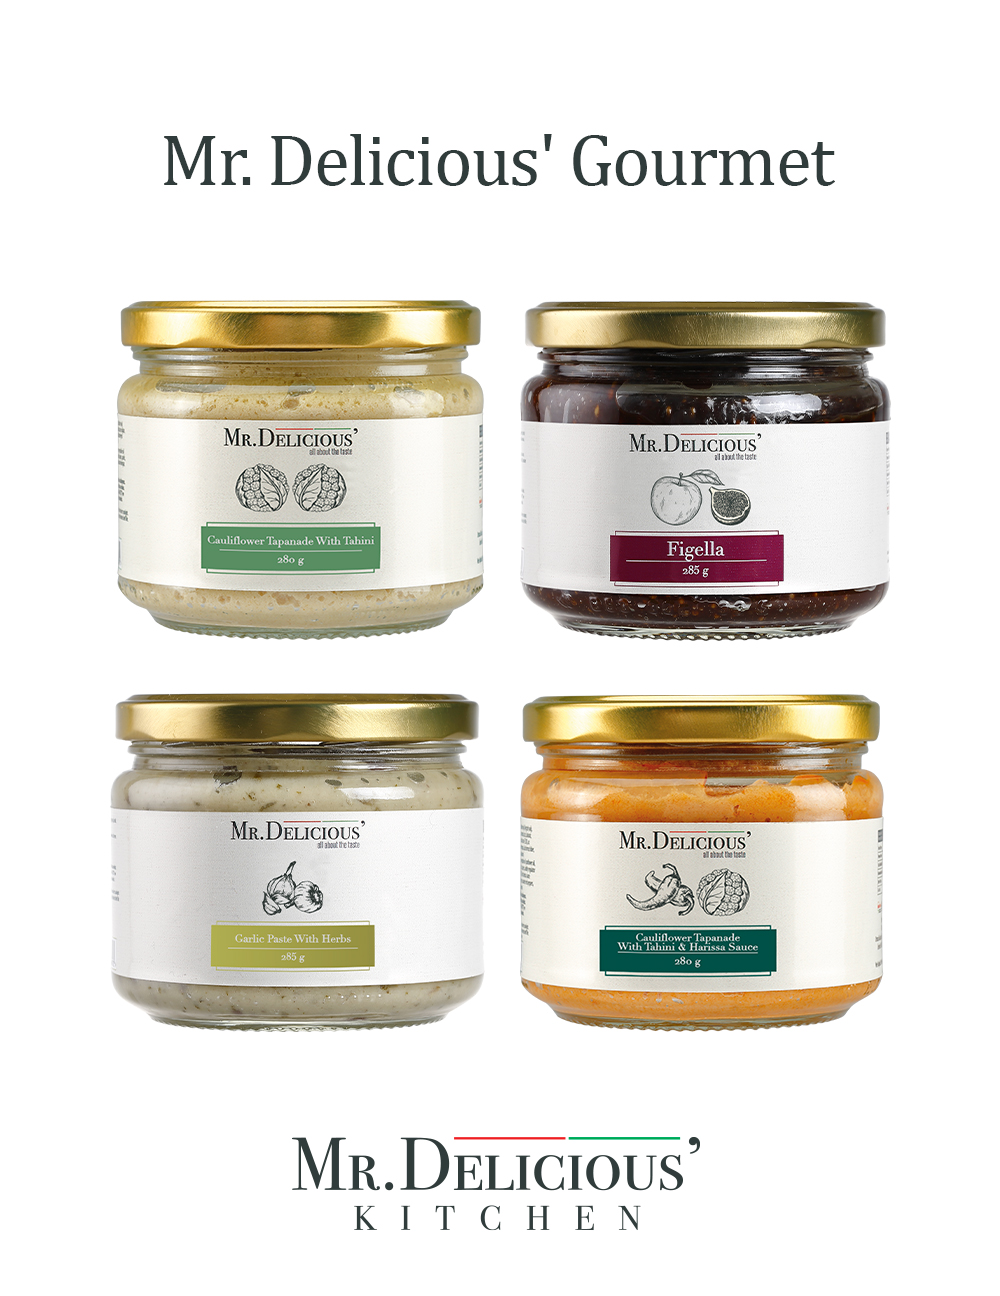 Mr. Delicious' Gourmet